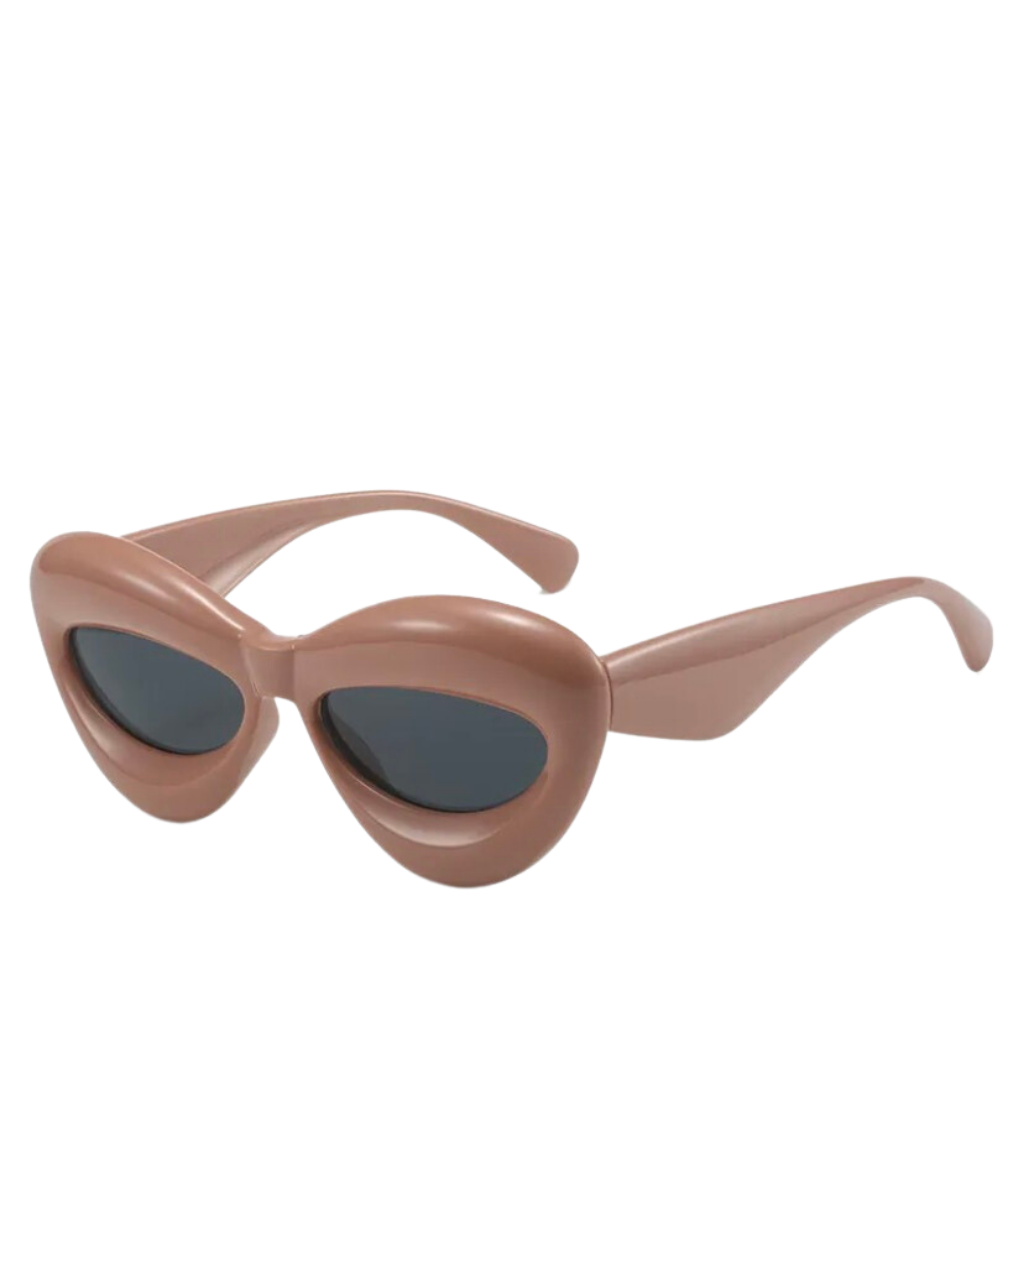 'True' Oval Sunglasses (Khaki)